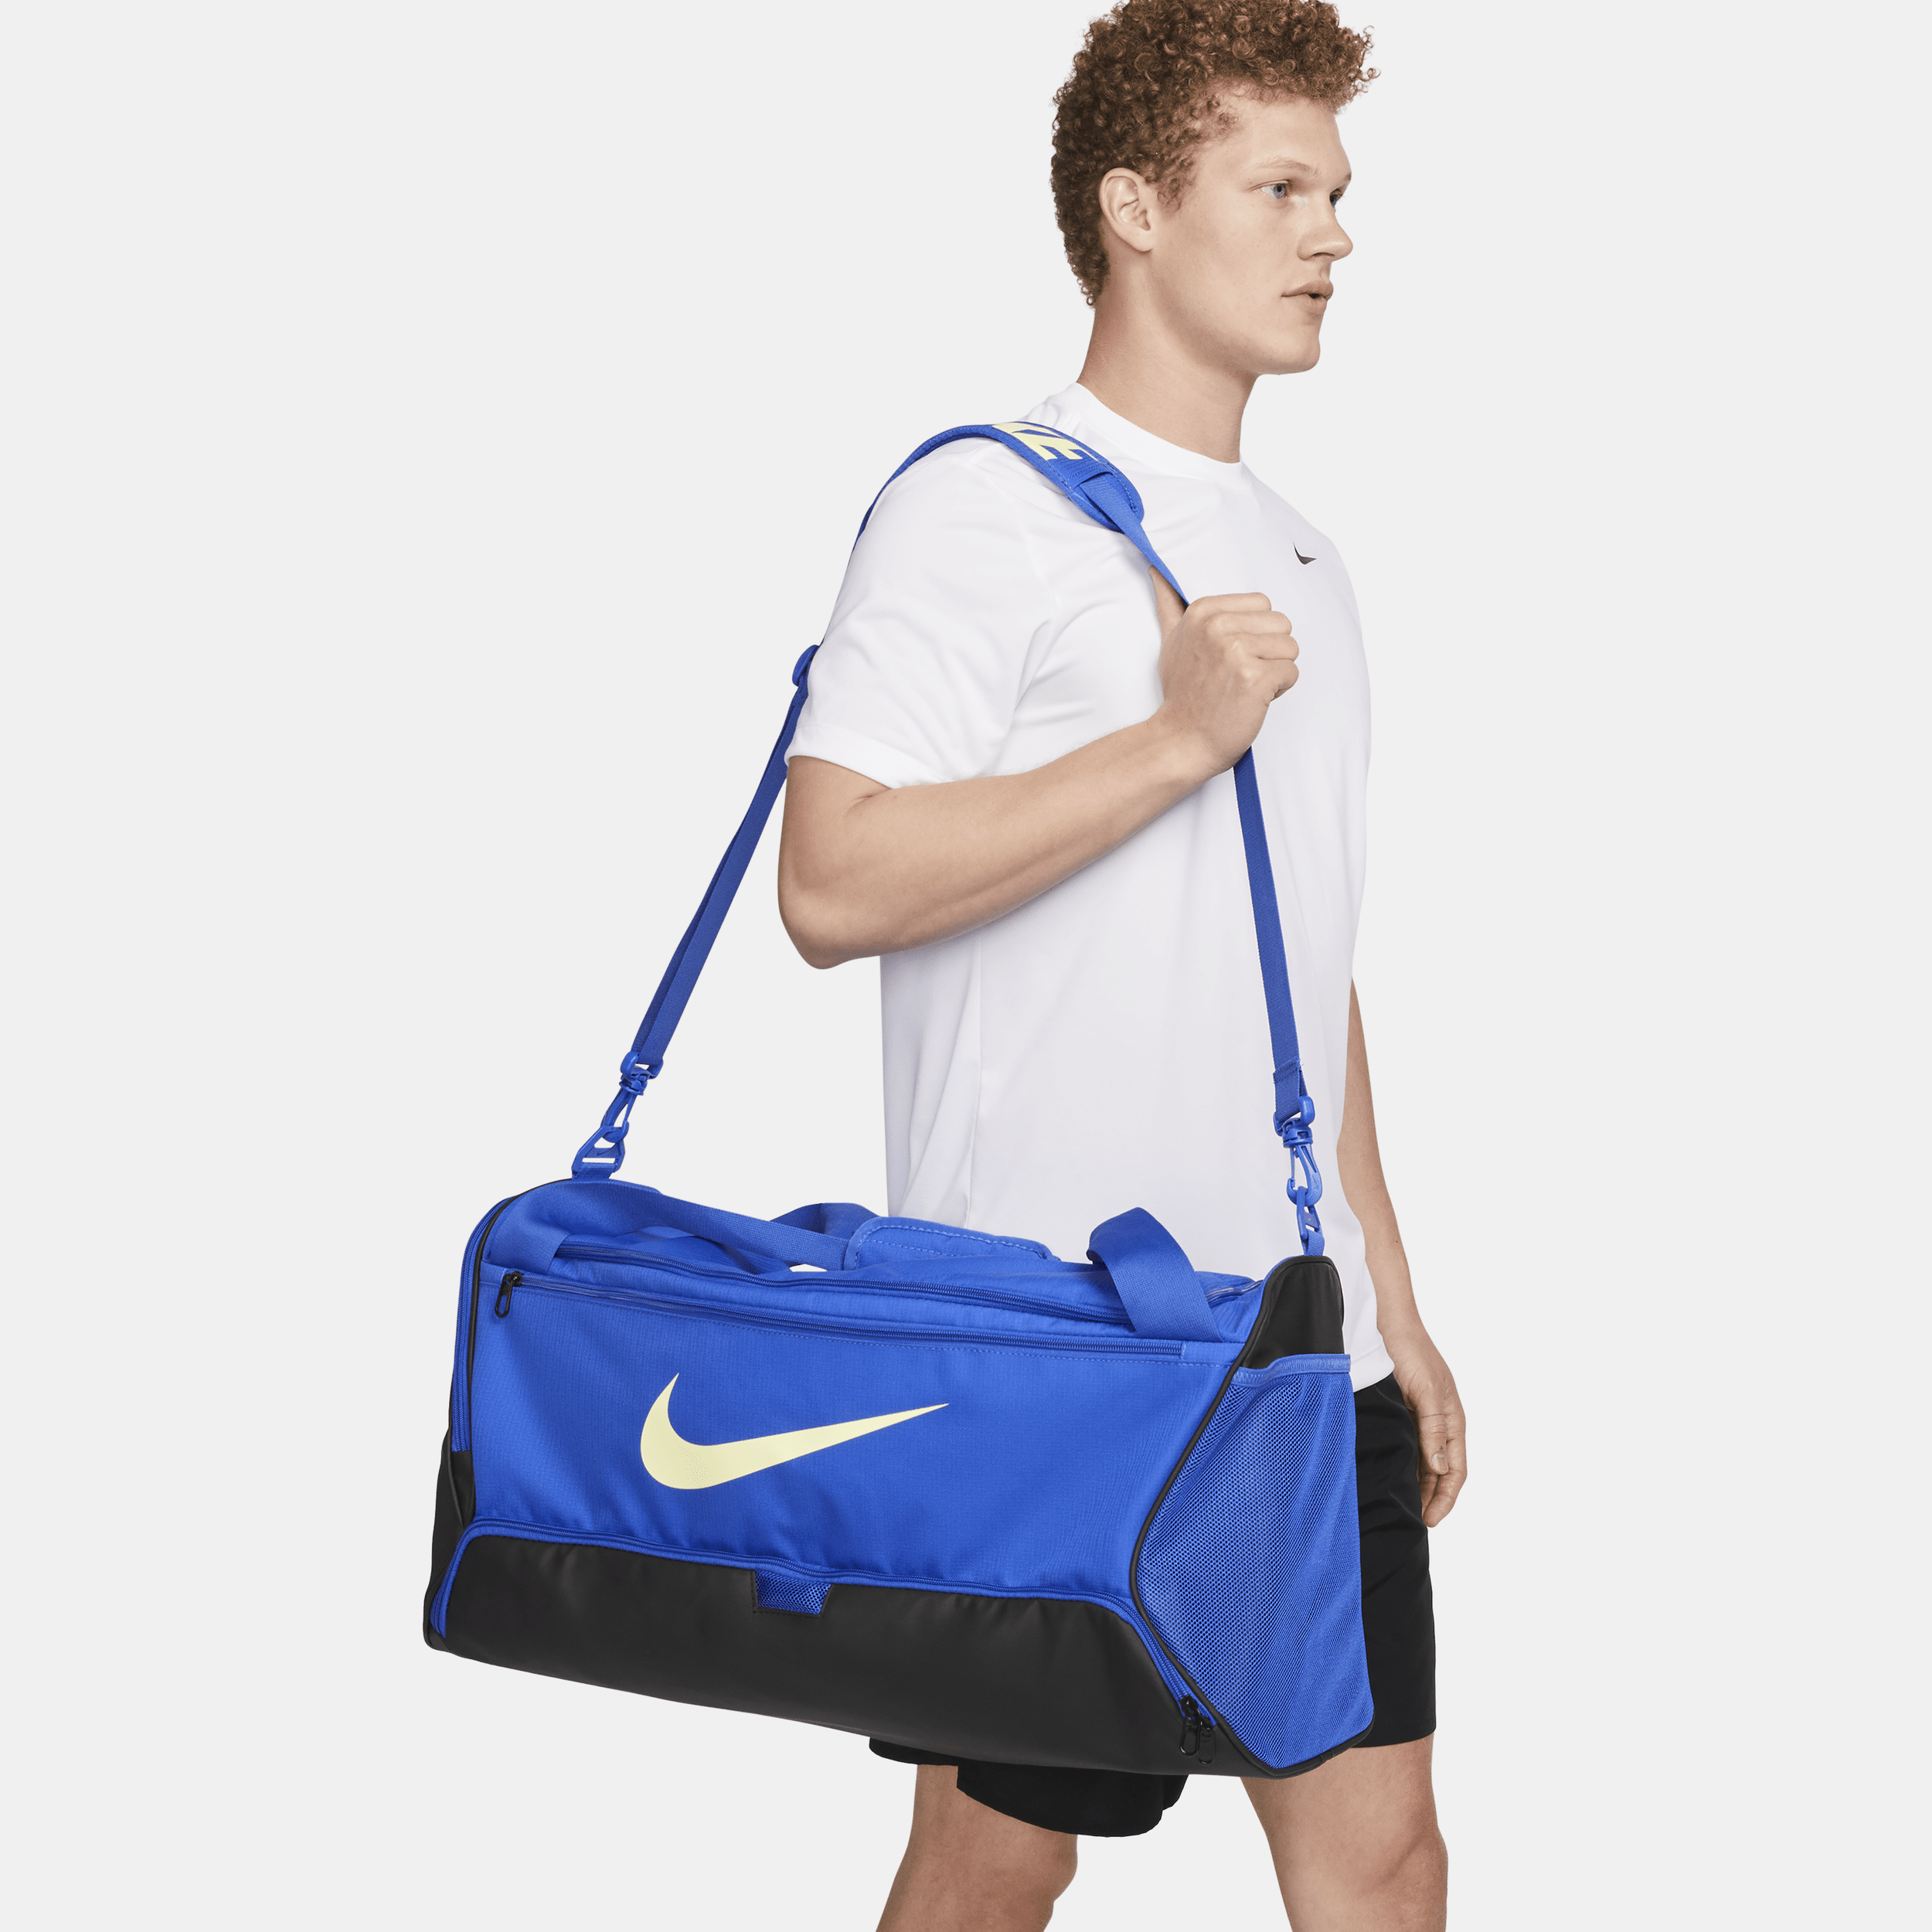 Nike Brasilia Medium 25x12x12 60L Black duffle Training Gym Travel bag |  eBay